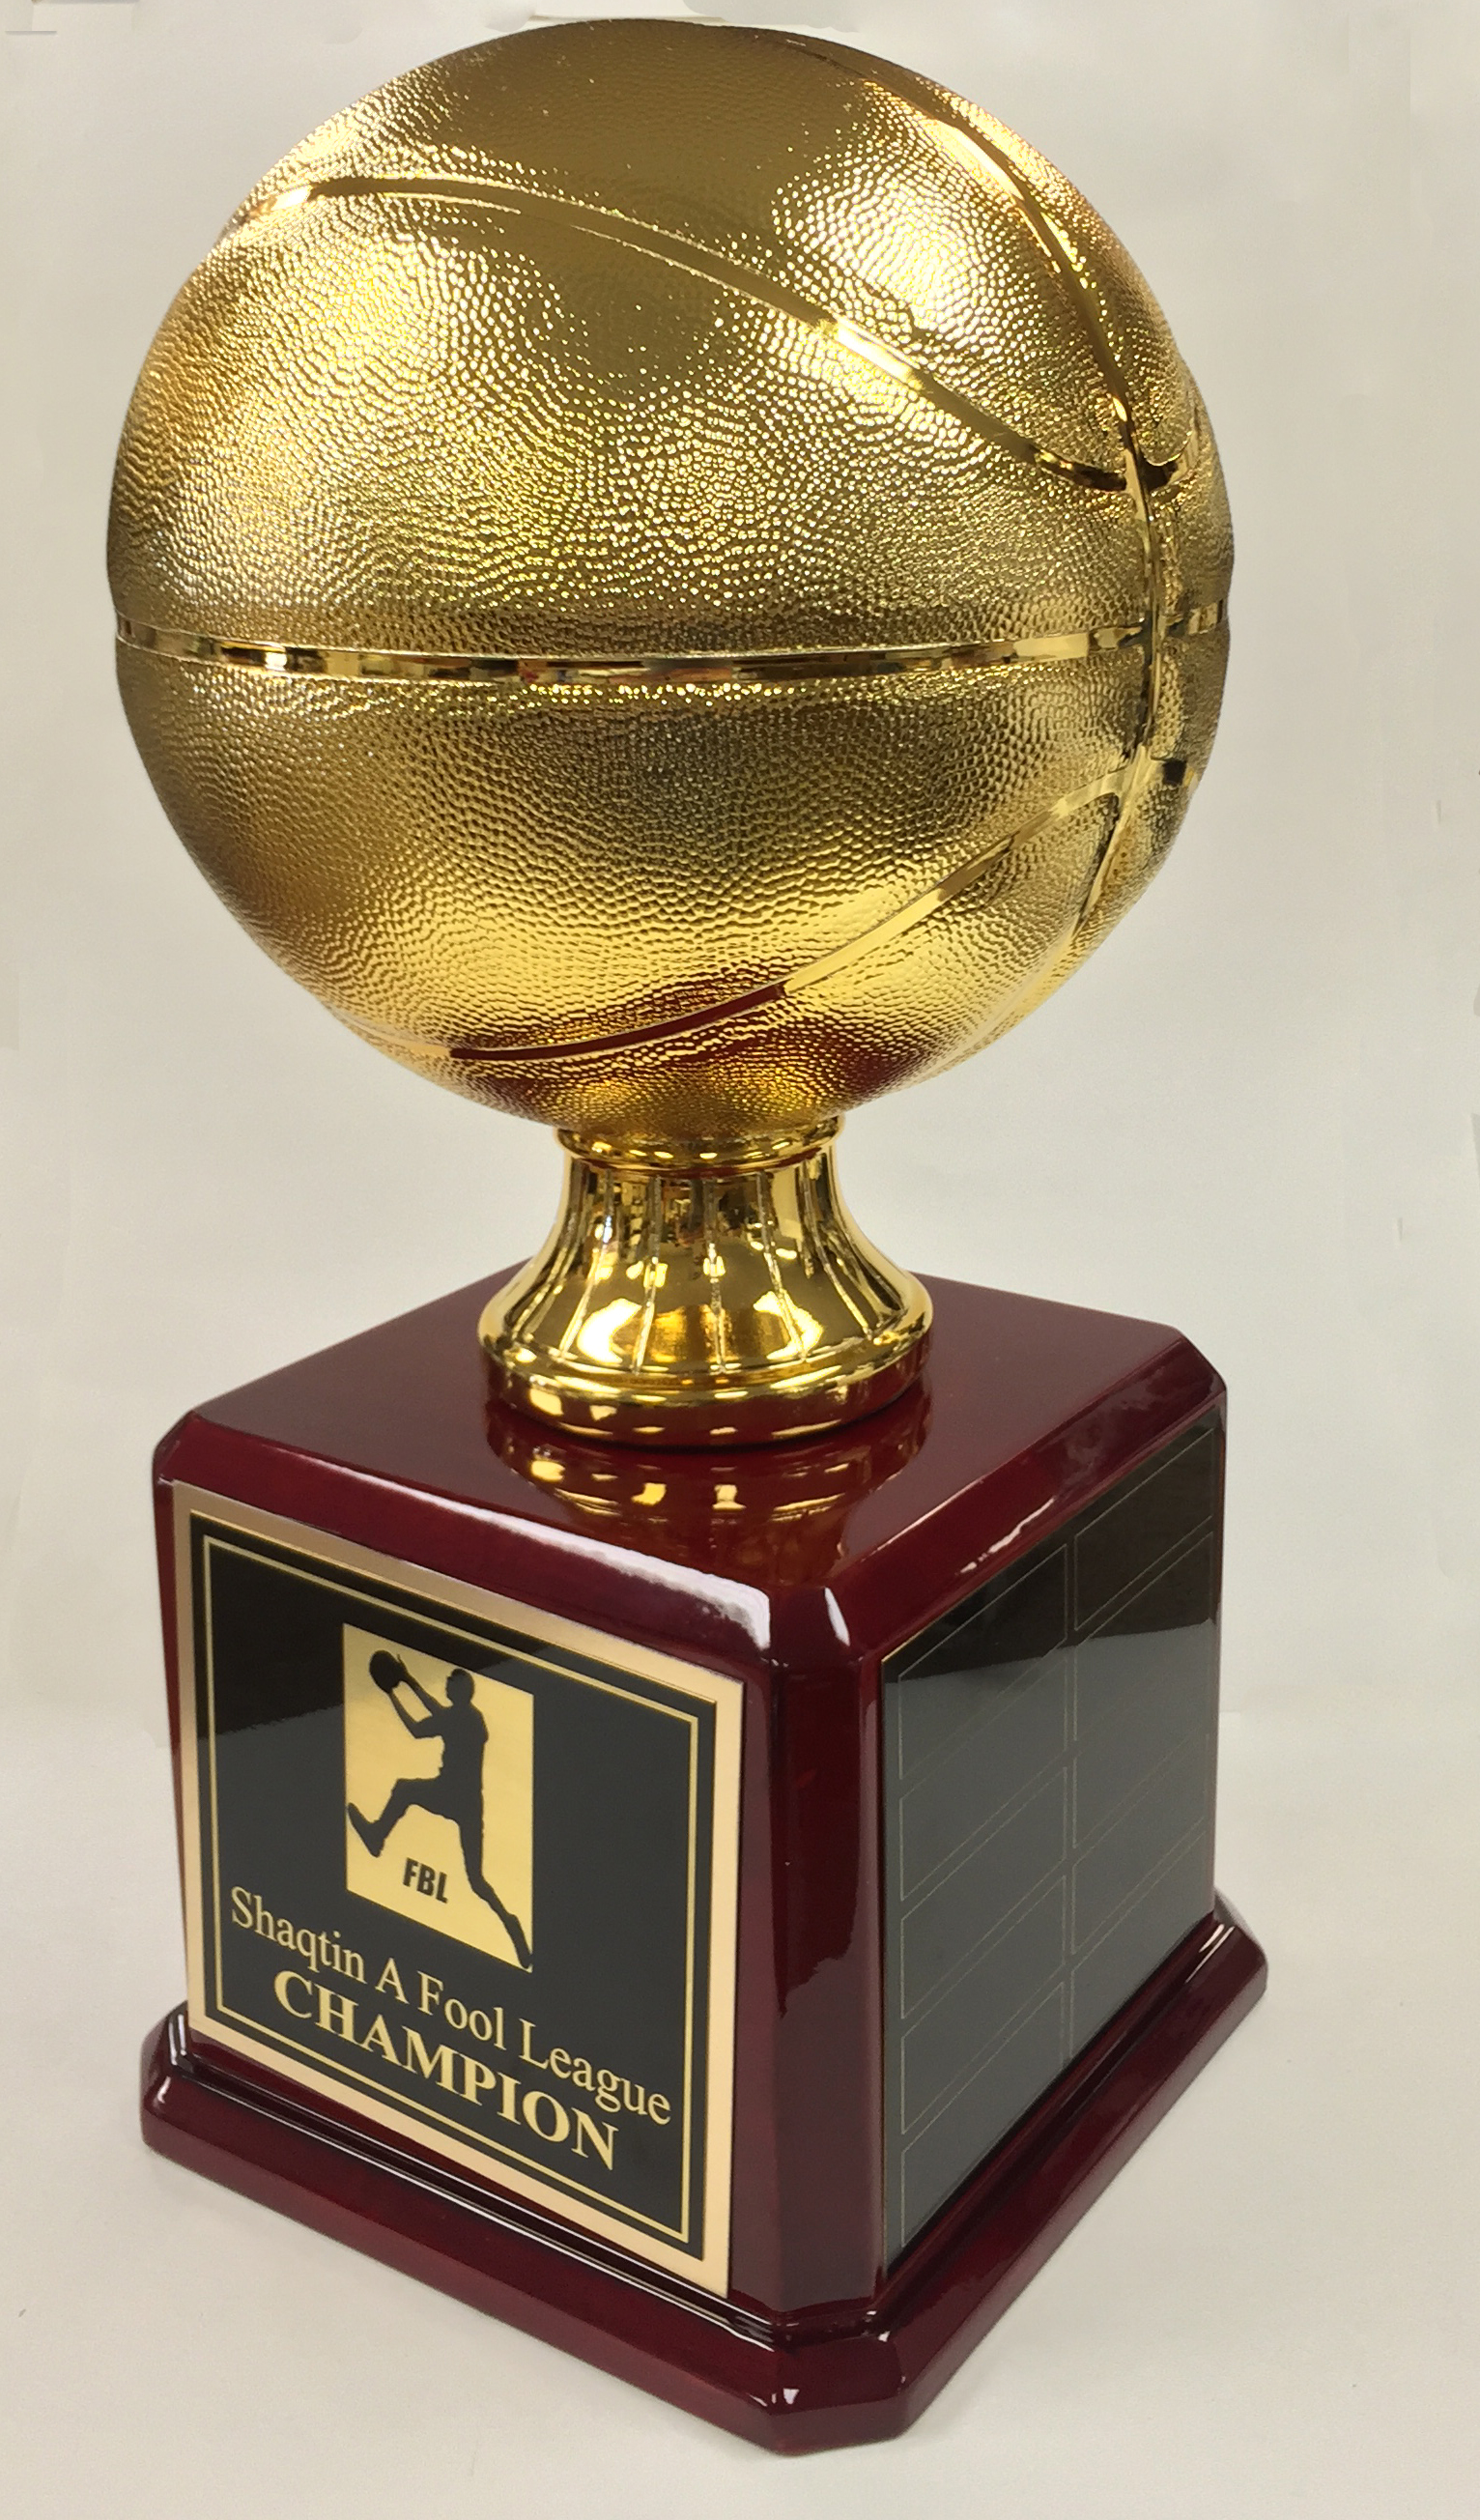 Basketball Trophy, Golden Trophies, Award Trophy, Golden Resin Trophies,5.1  Inch Basketball Statue C…See more Basketball Trophy, Golden Trophies